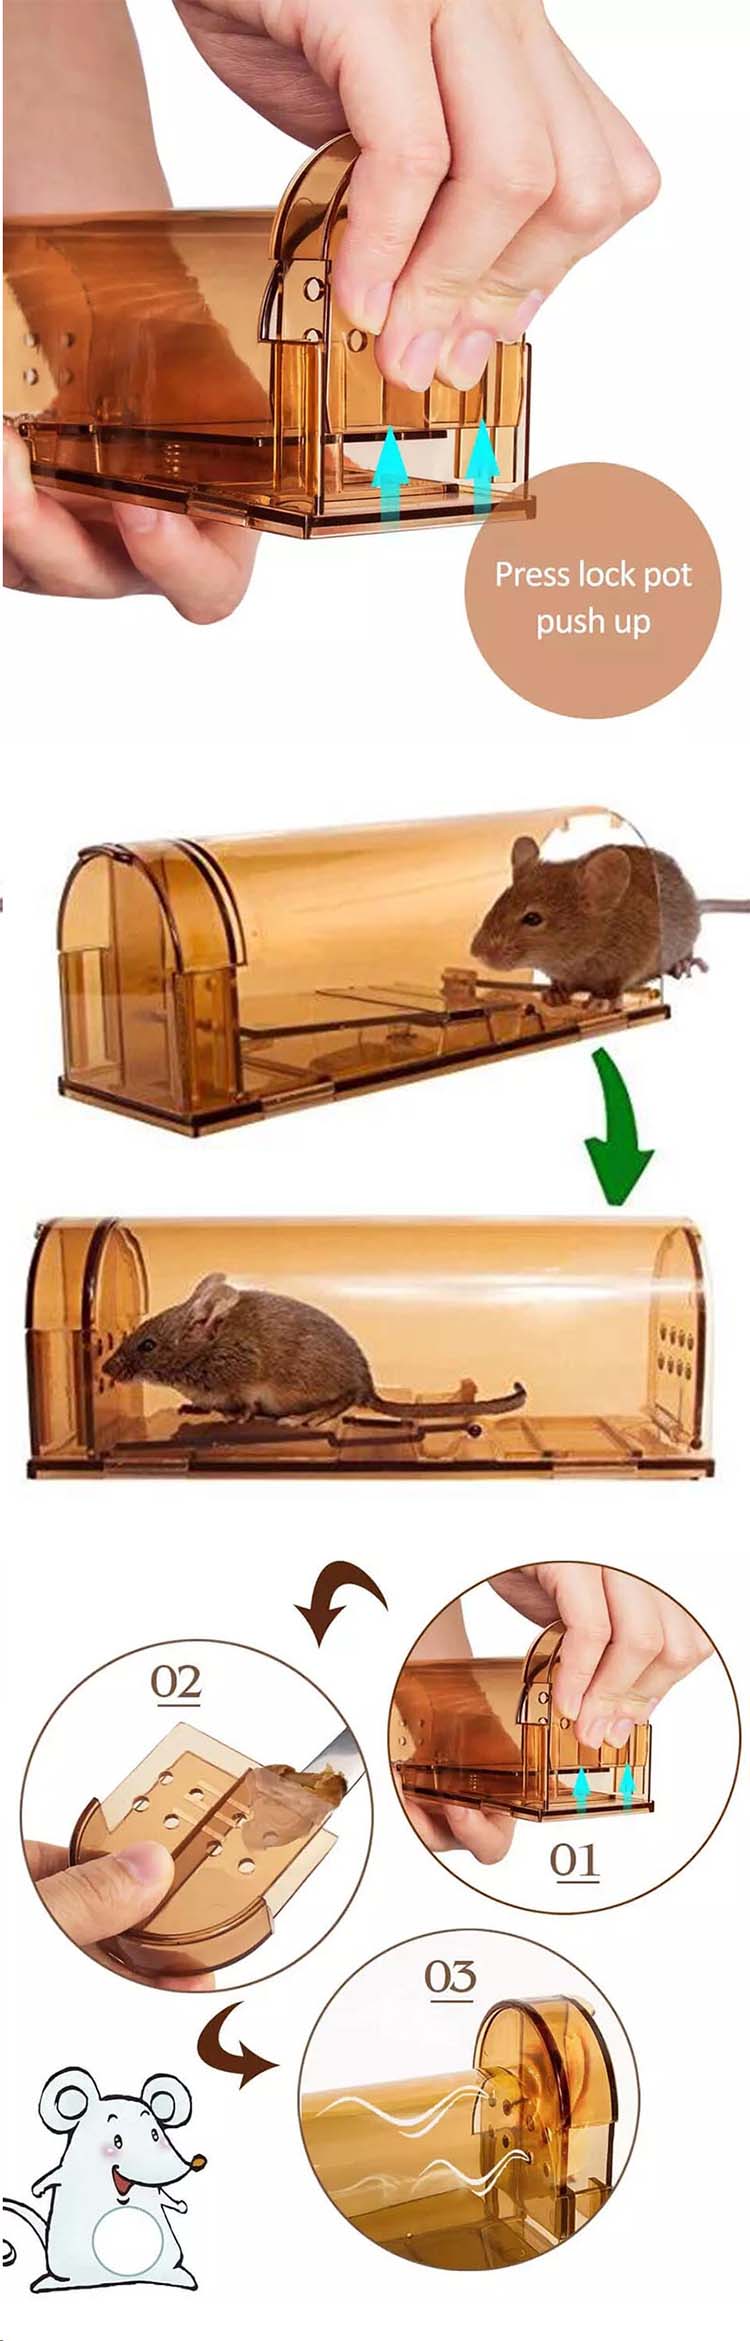 2019 Amazon Hot Sell Kućna Plastika Humani Live Catch Smart Mouse Rat Trap Mouse Trap Cage03